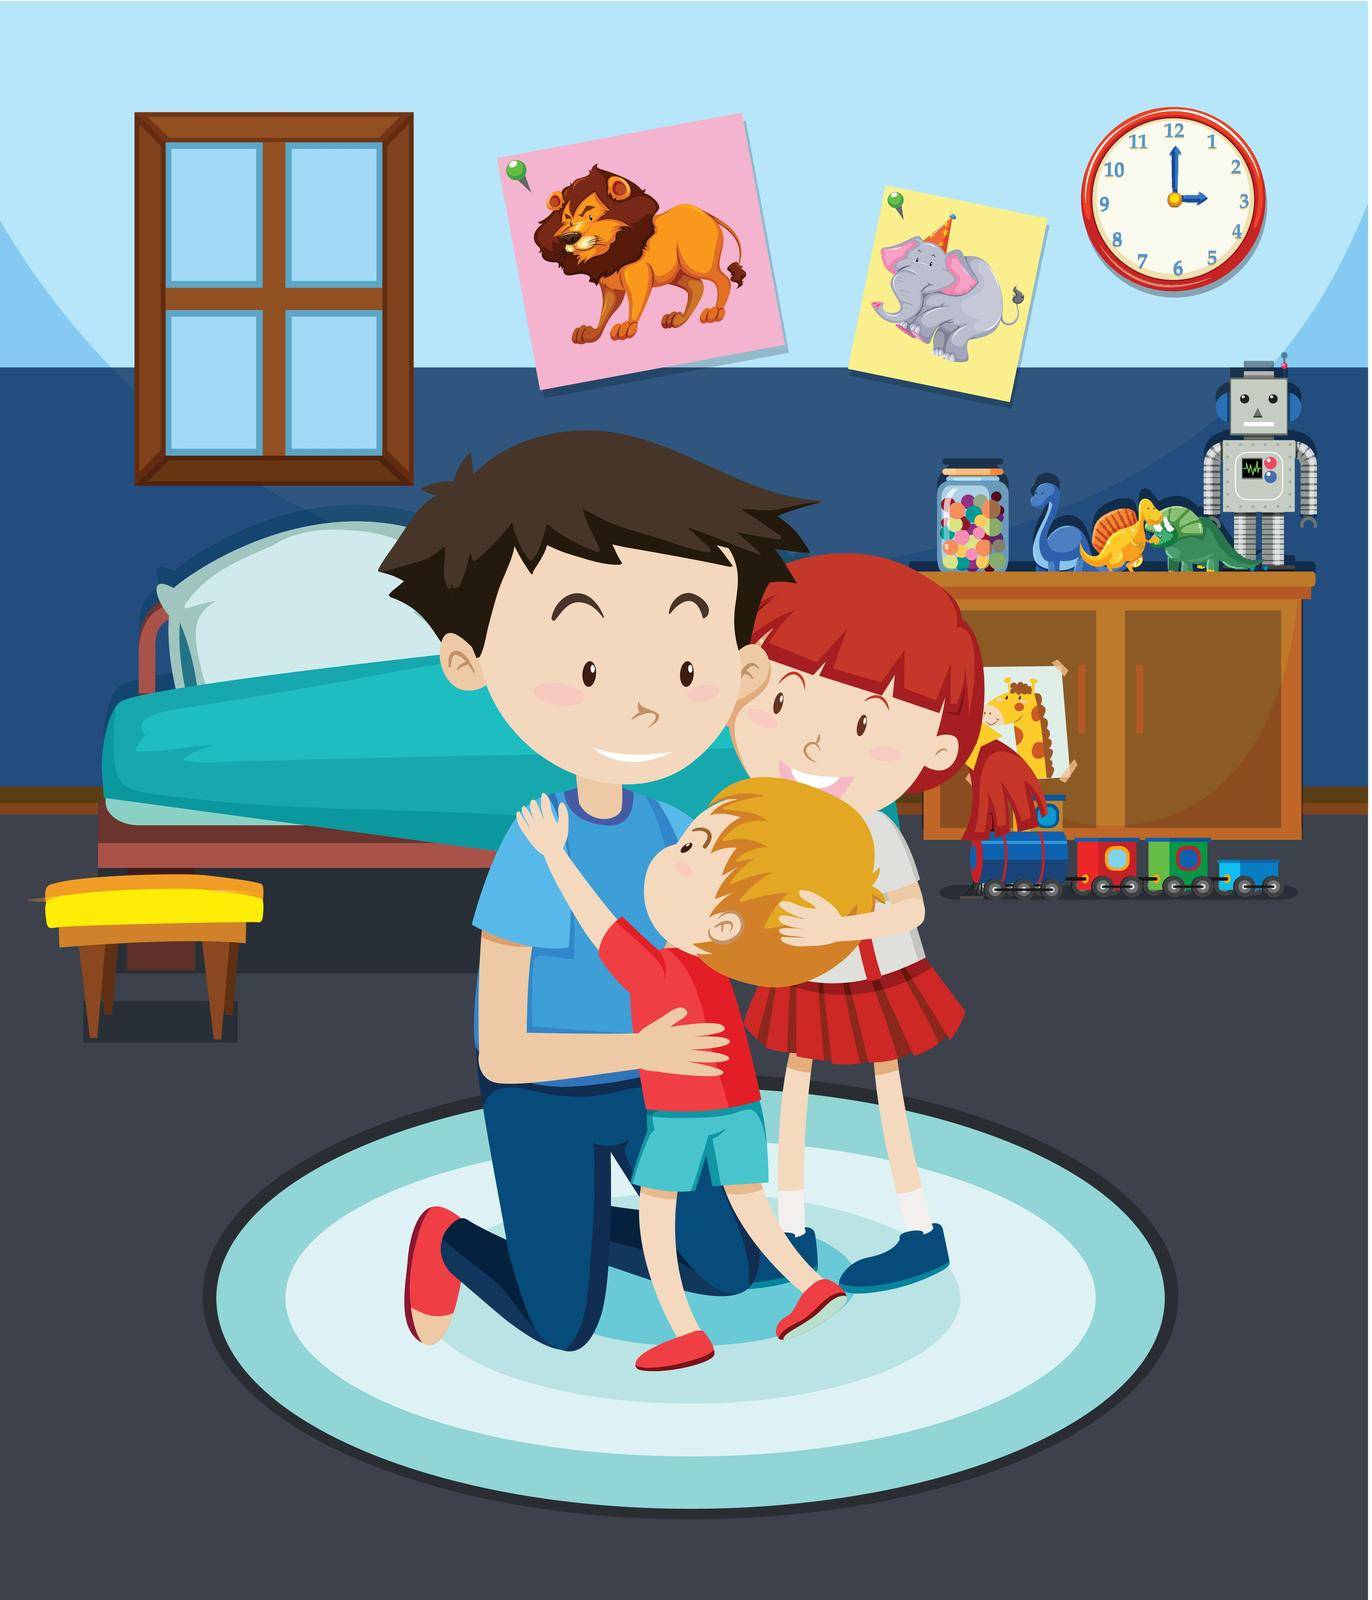 Dad and children in bedroom illustration